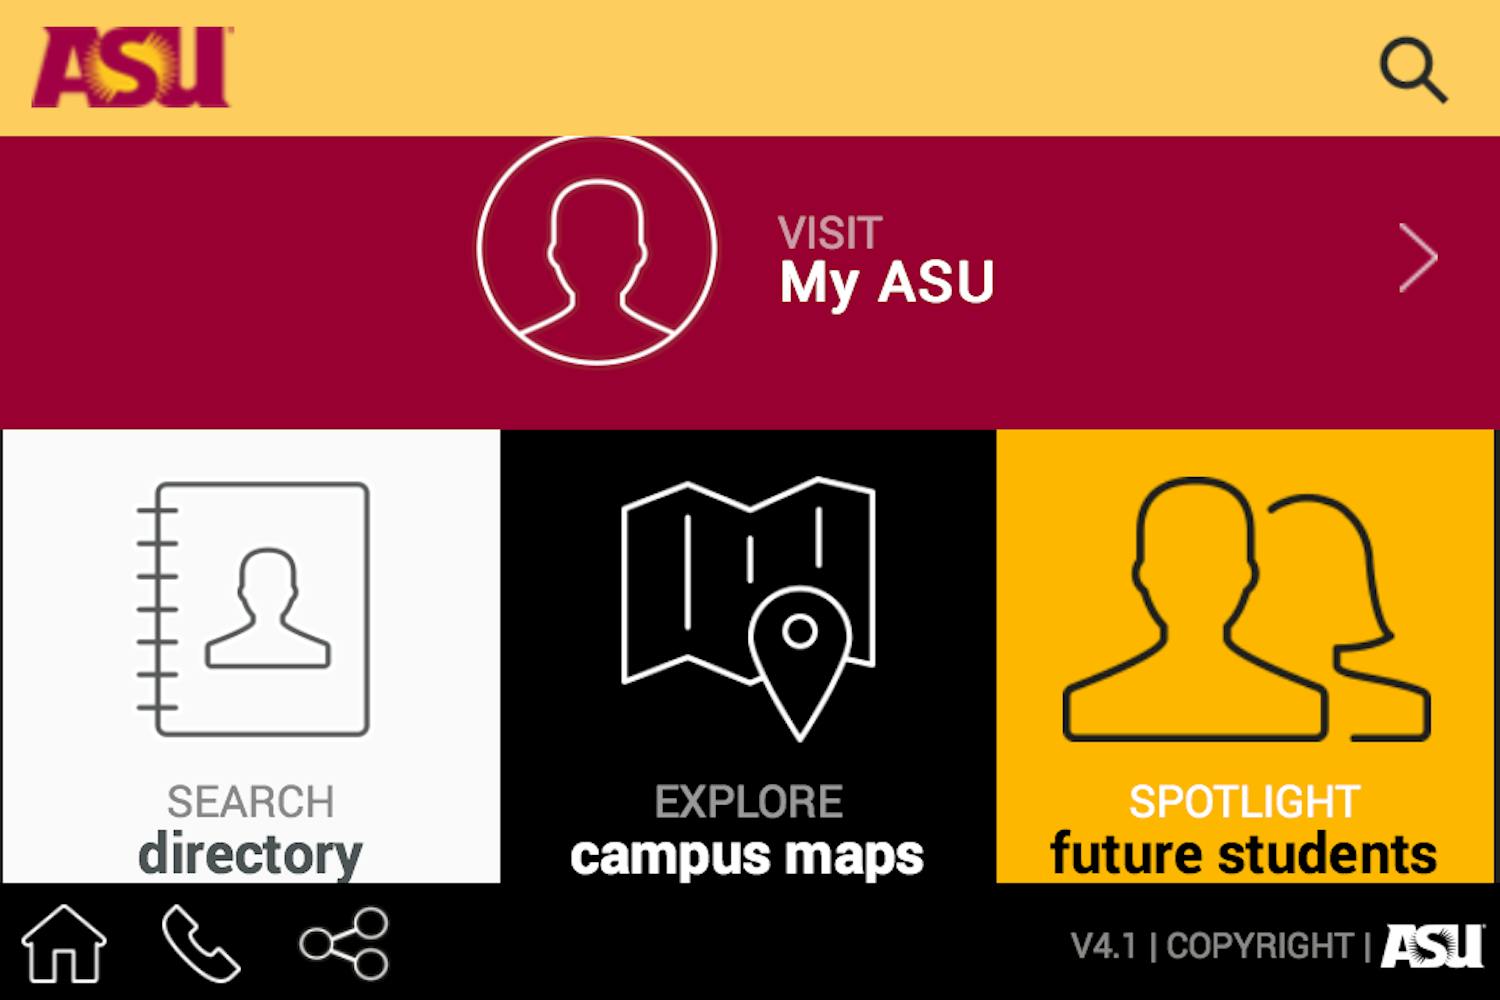 The main navigation screen on the ASU app.